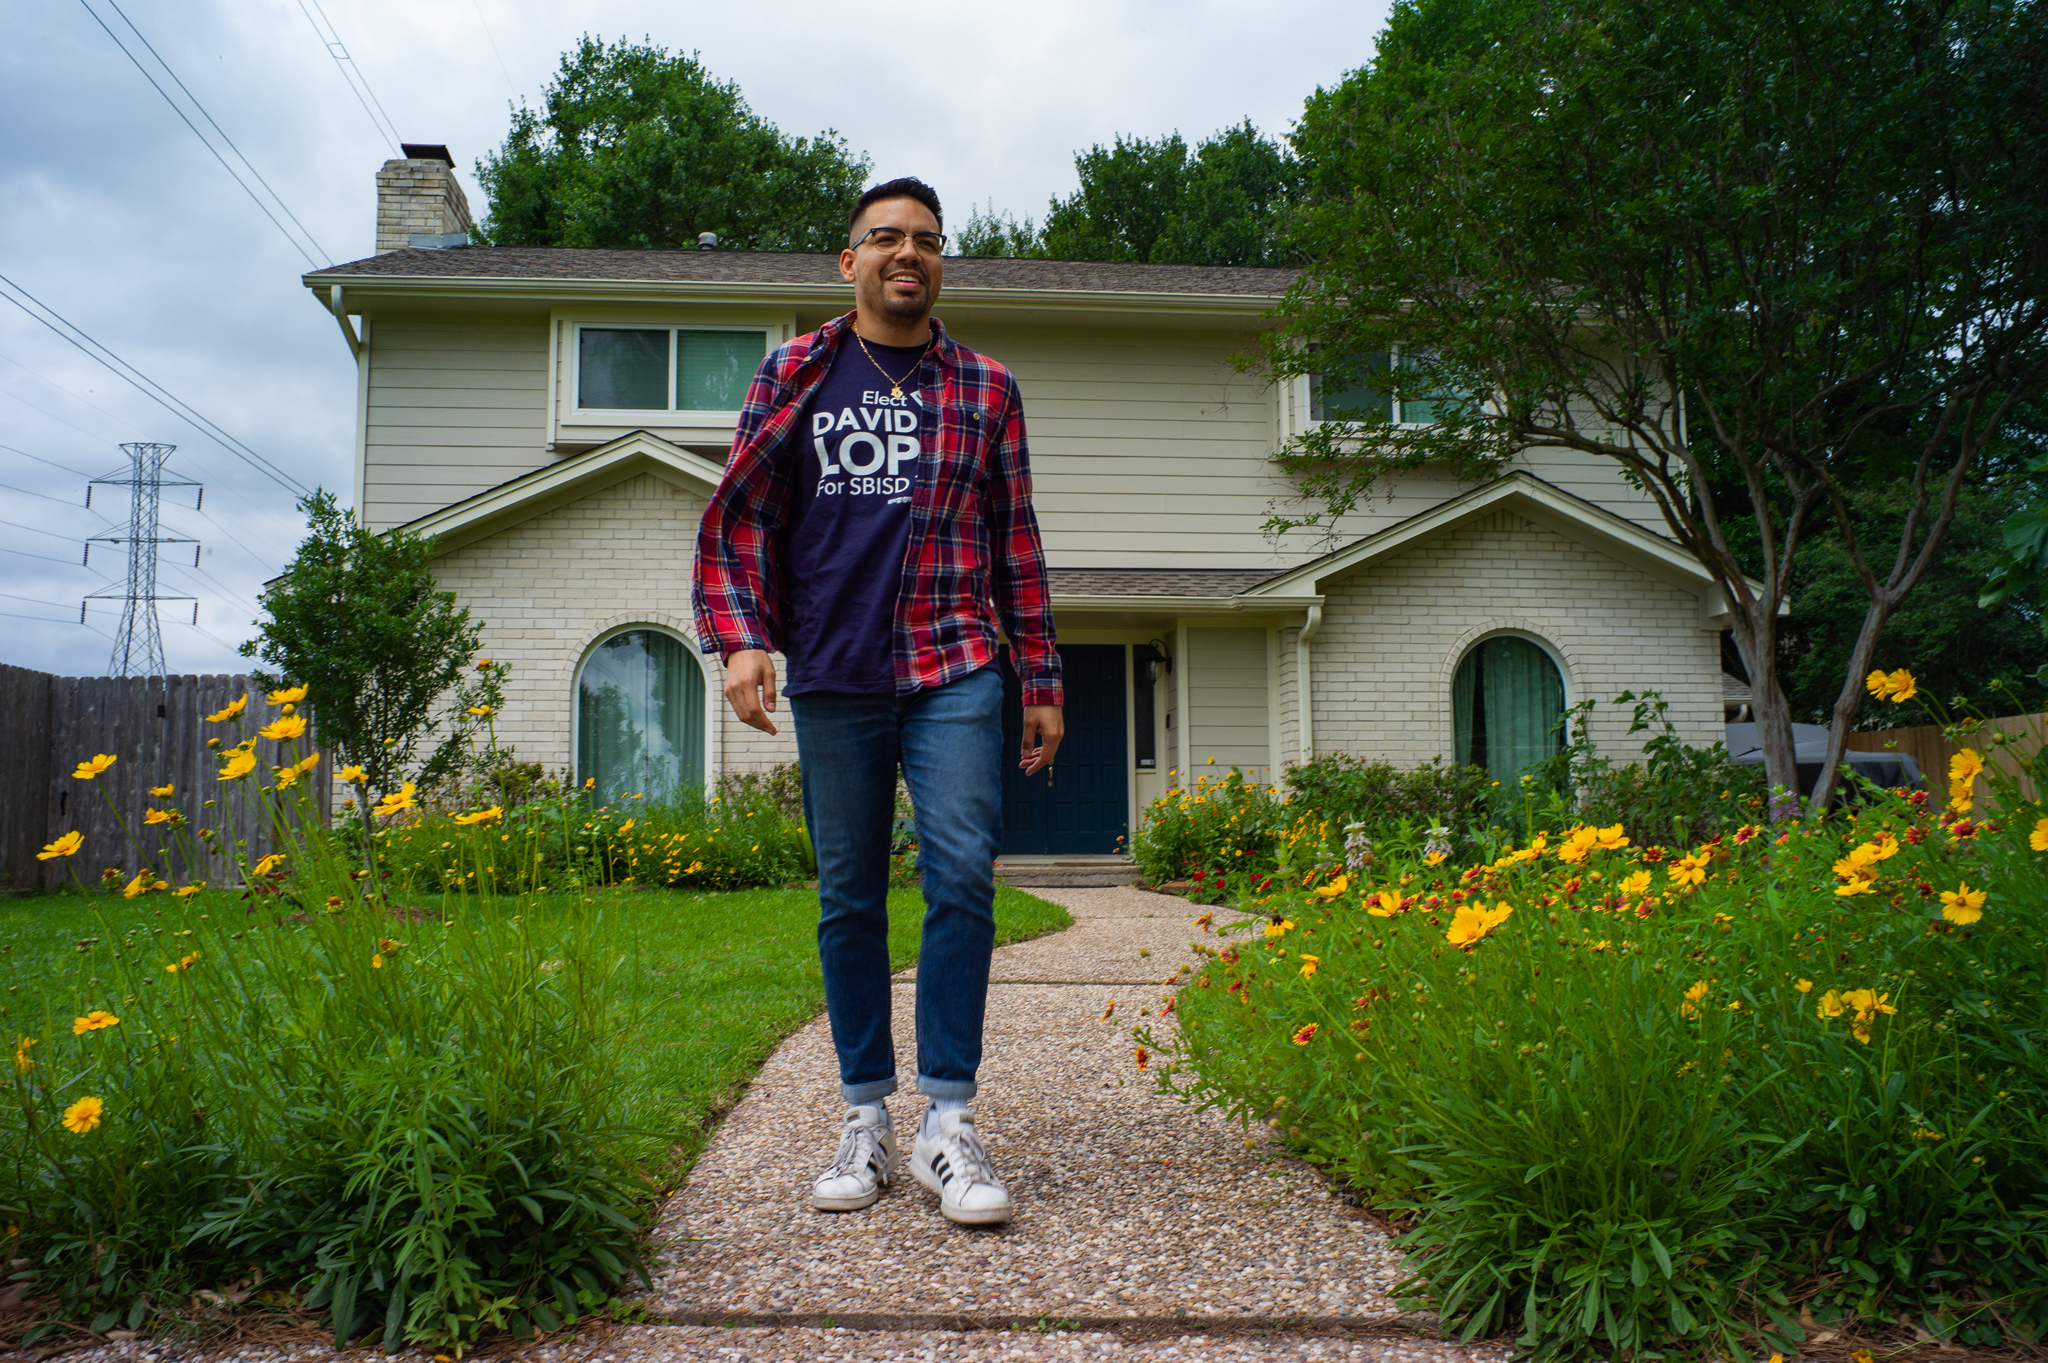 SBISD candidate David Lopez walks outside of a house near flowers